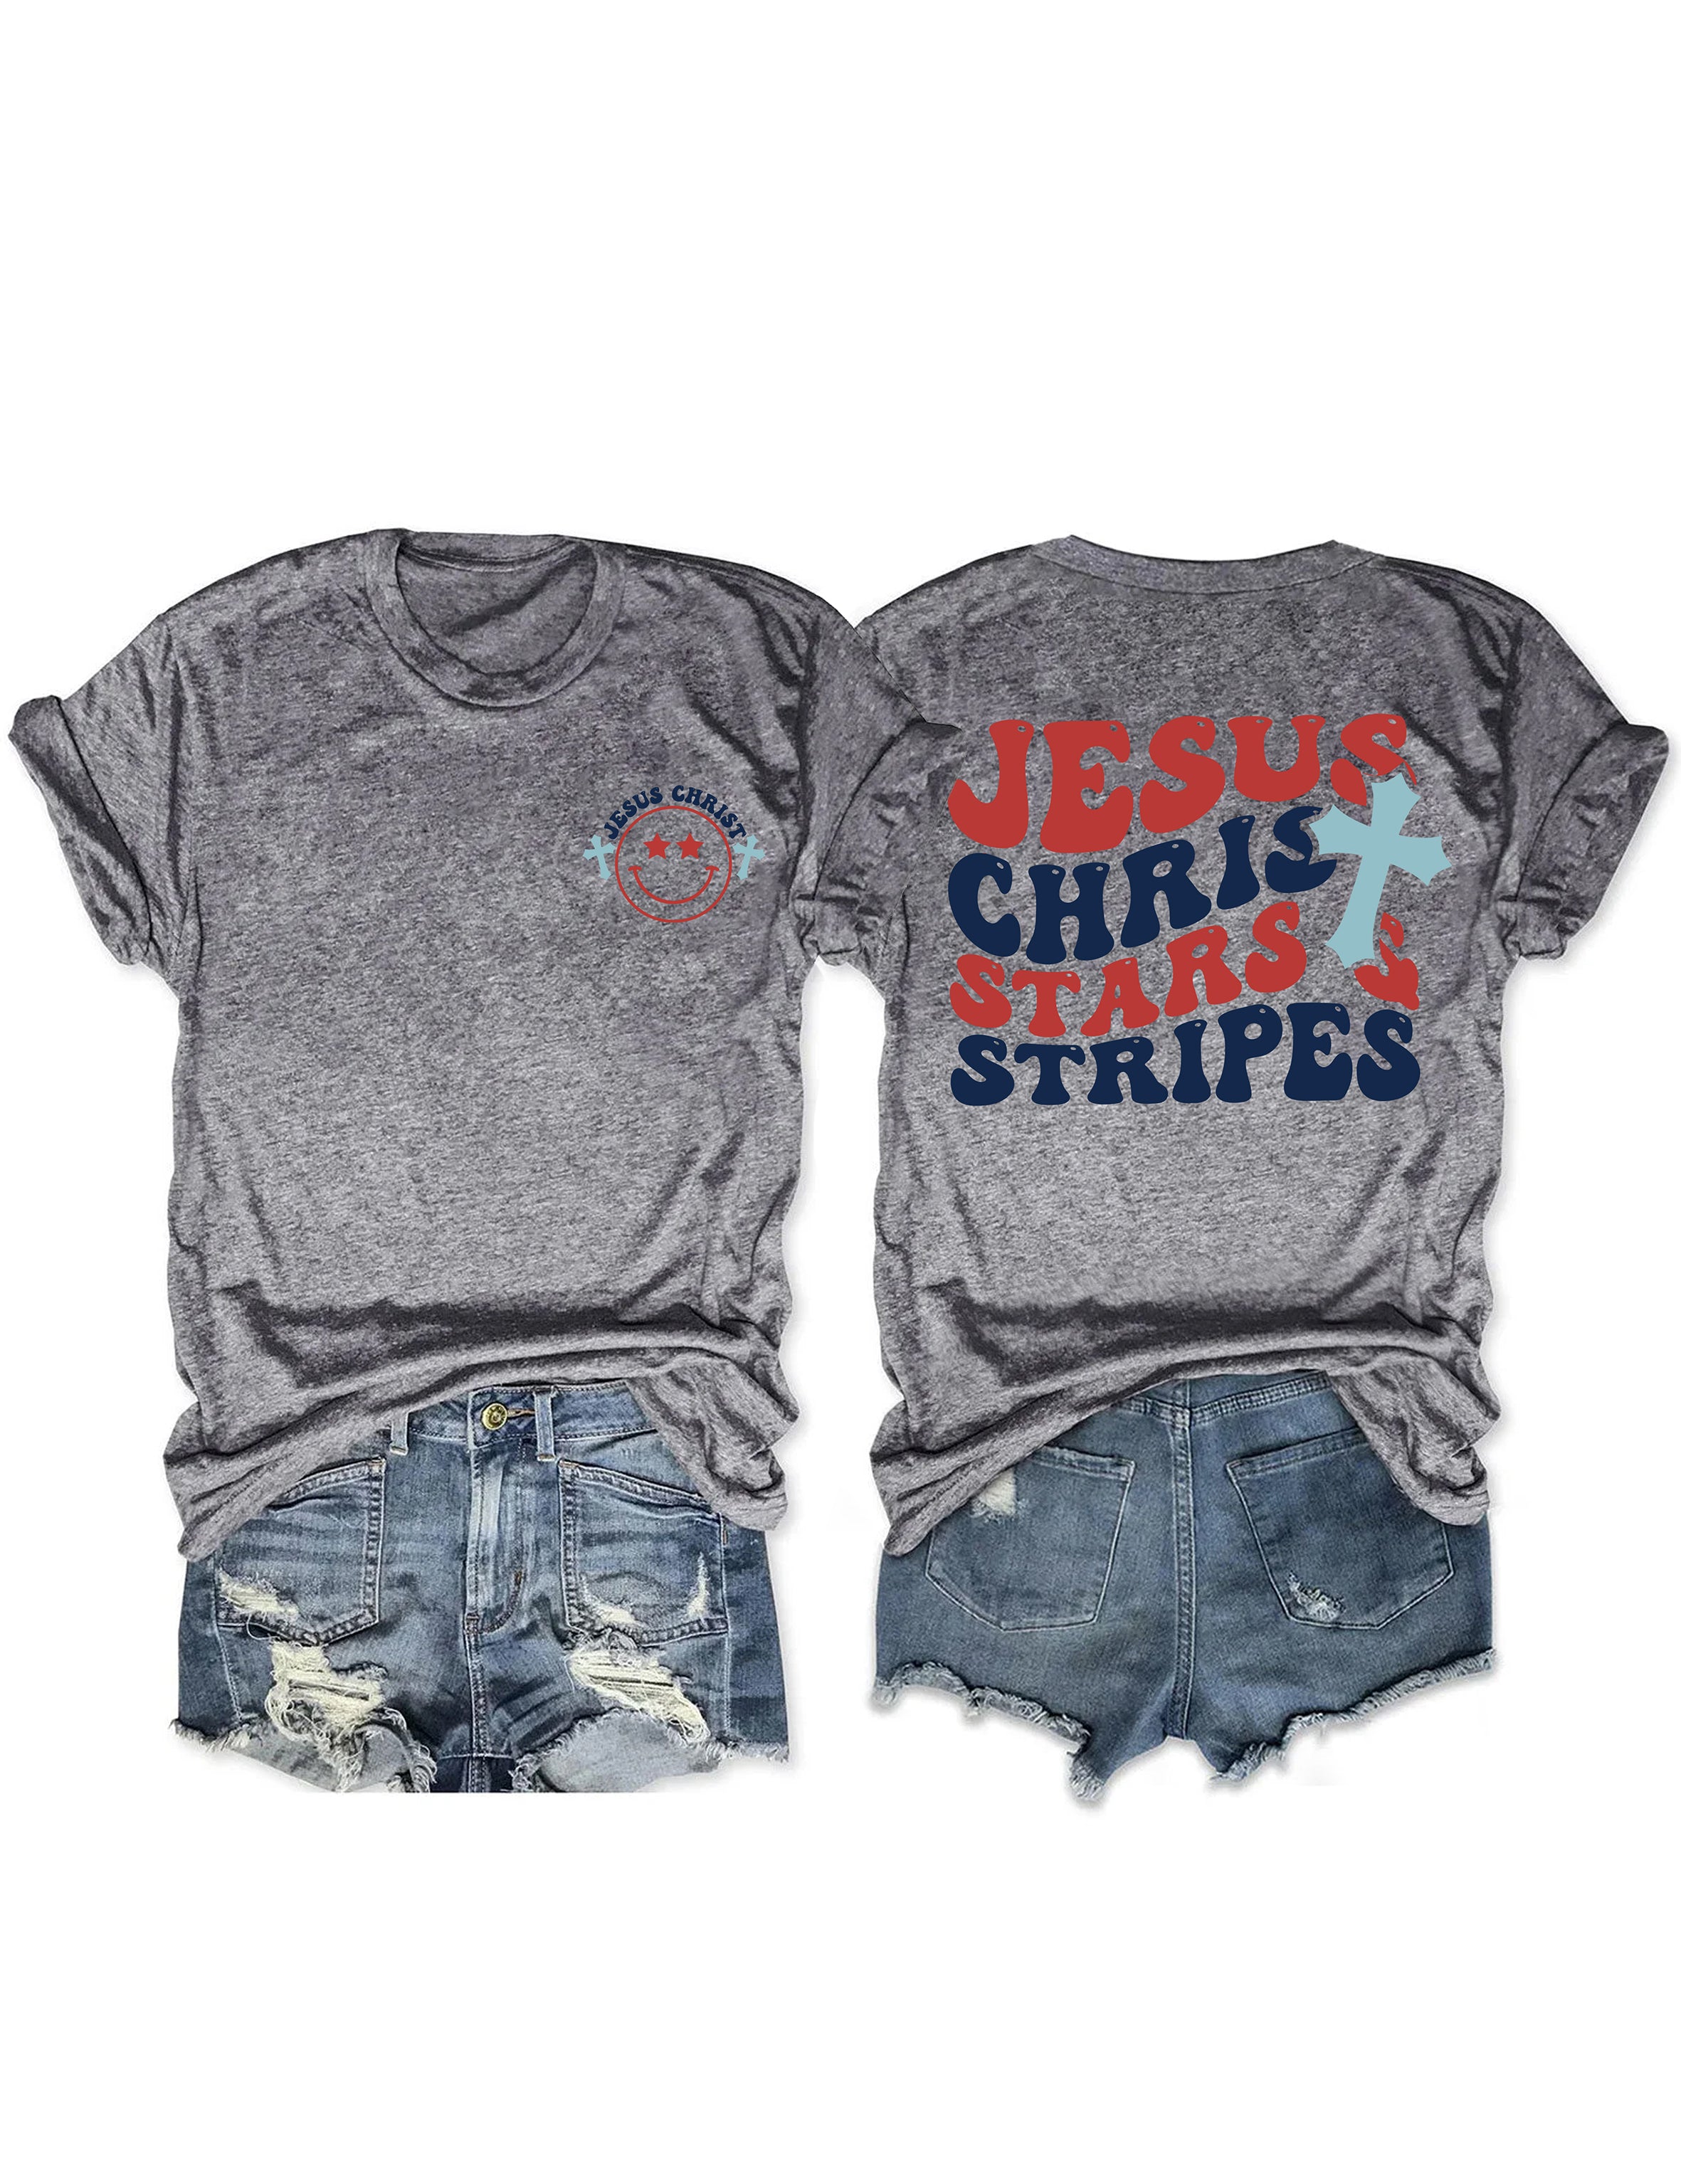 Jesus Christ Stars & Stripes T-shirt